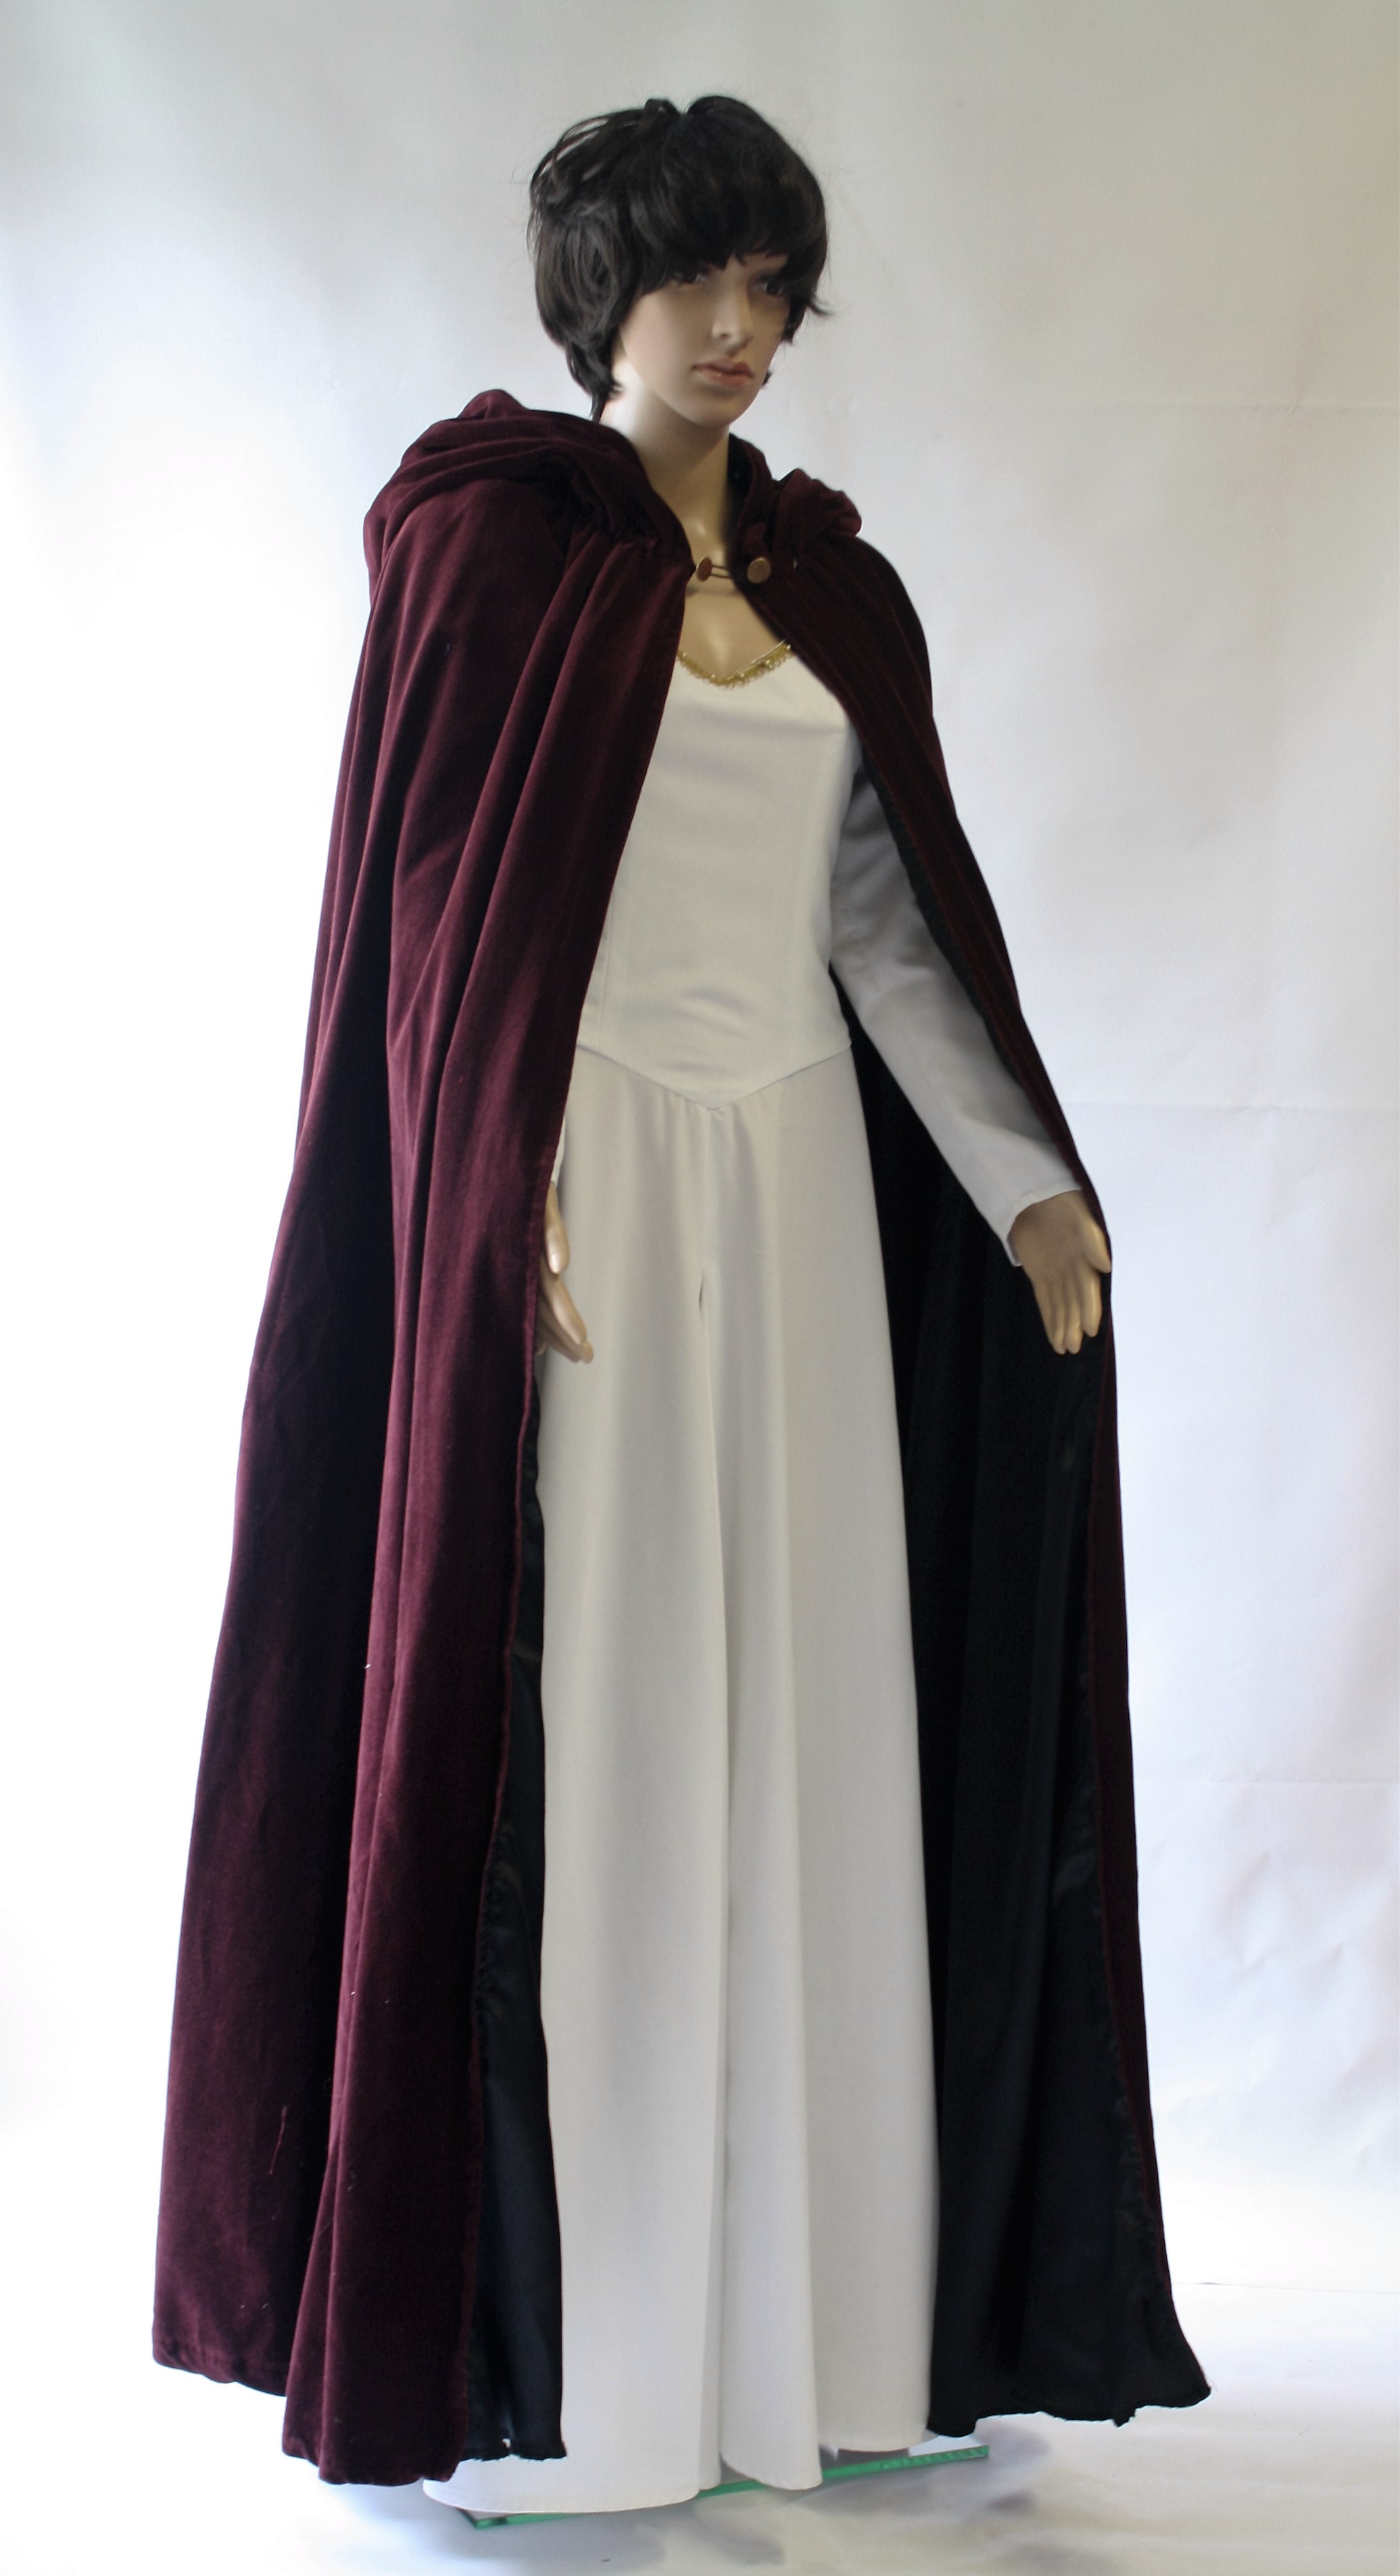 Voorverkoop Beweegt niet Mentaliteit Middeleeuwse jurk met cape - Kostuumverhuur Isabelle